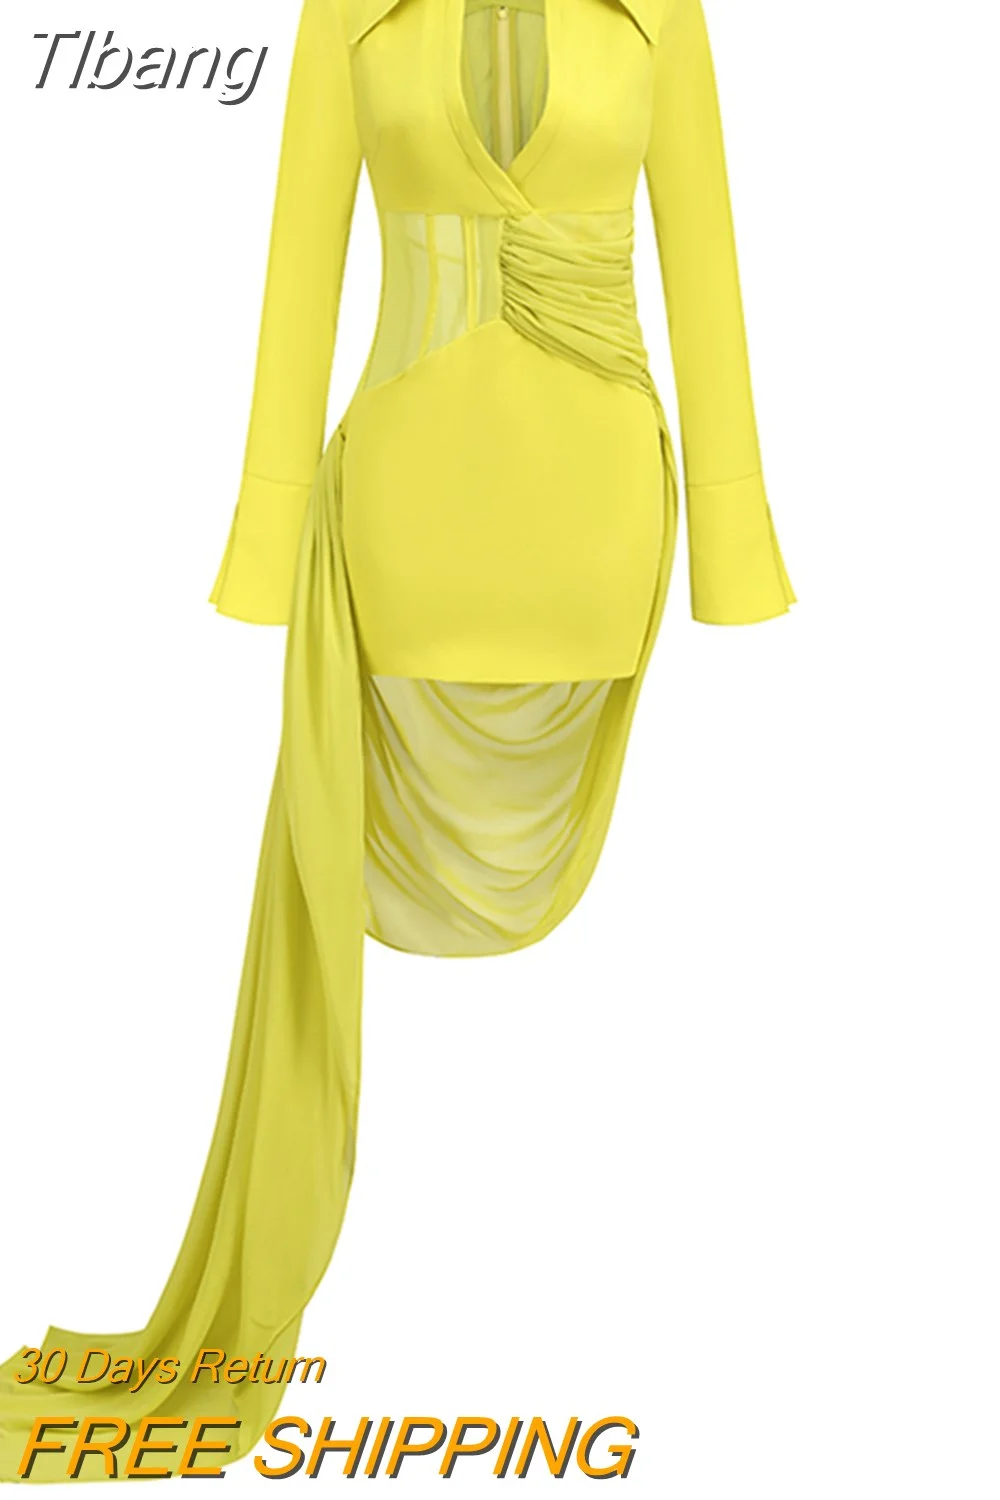 Tlbang Skinny Sexy Yellow Dresses For Women Deep V Neck Long Sleeve High Waist Spliced Mesh Mini Dress Female Fashion New